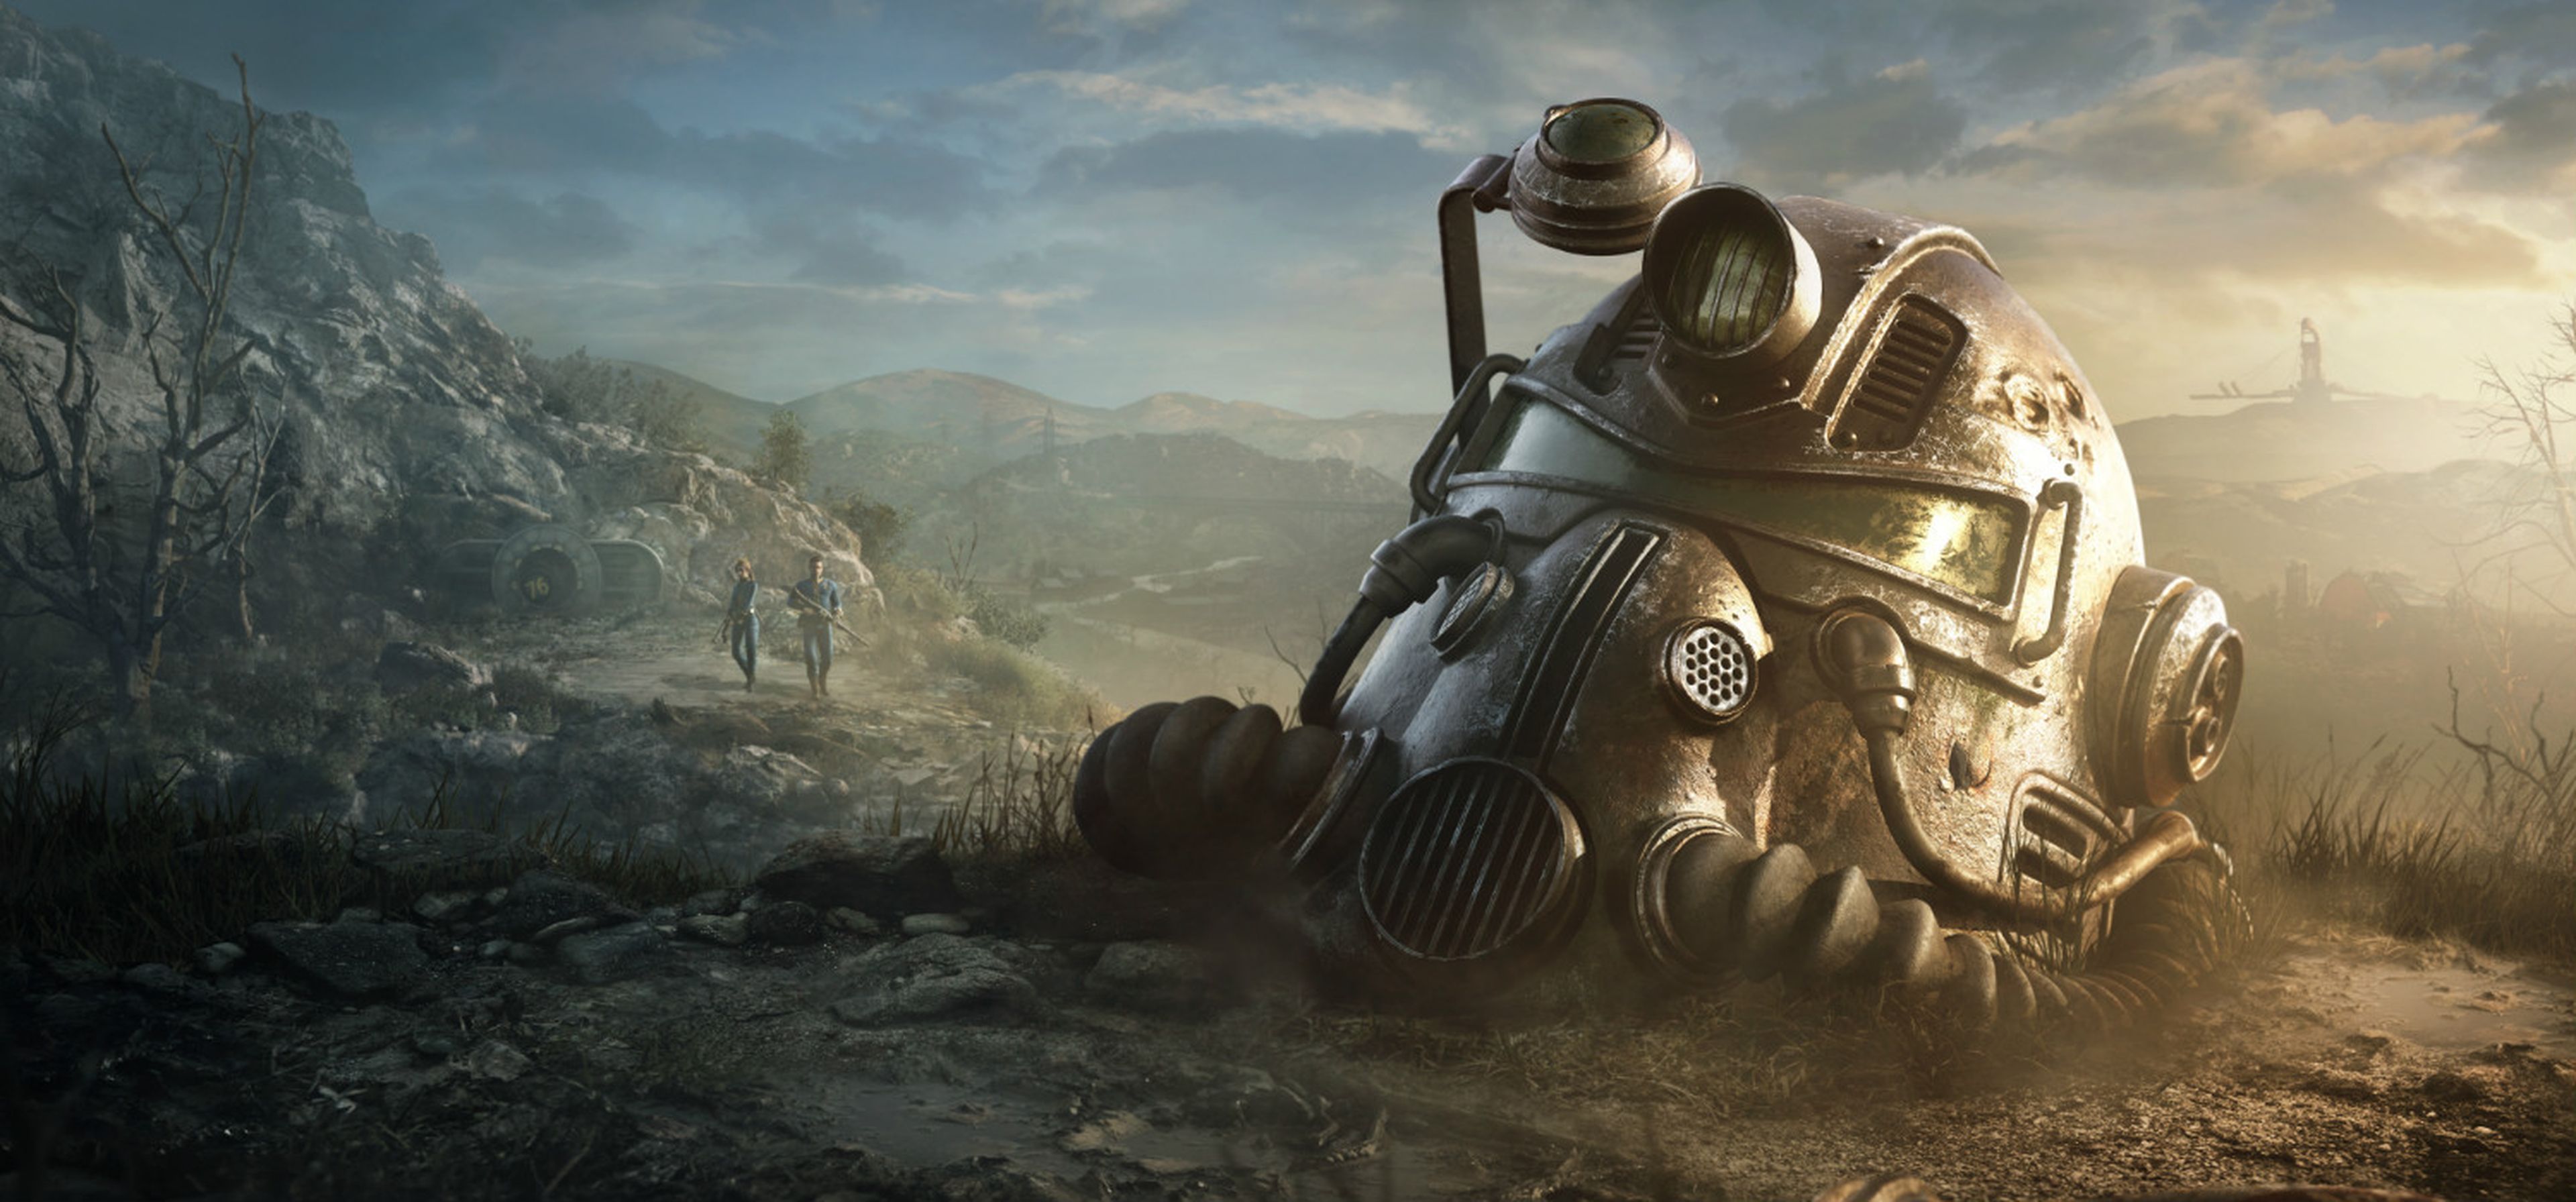 Análisis de Fallout 76 para PS4, Xbox One y PC